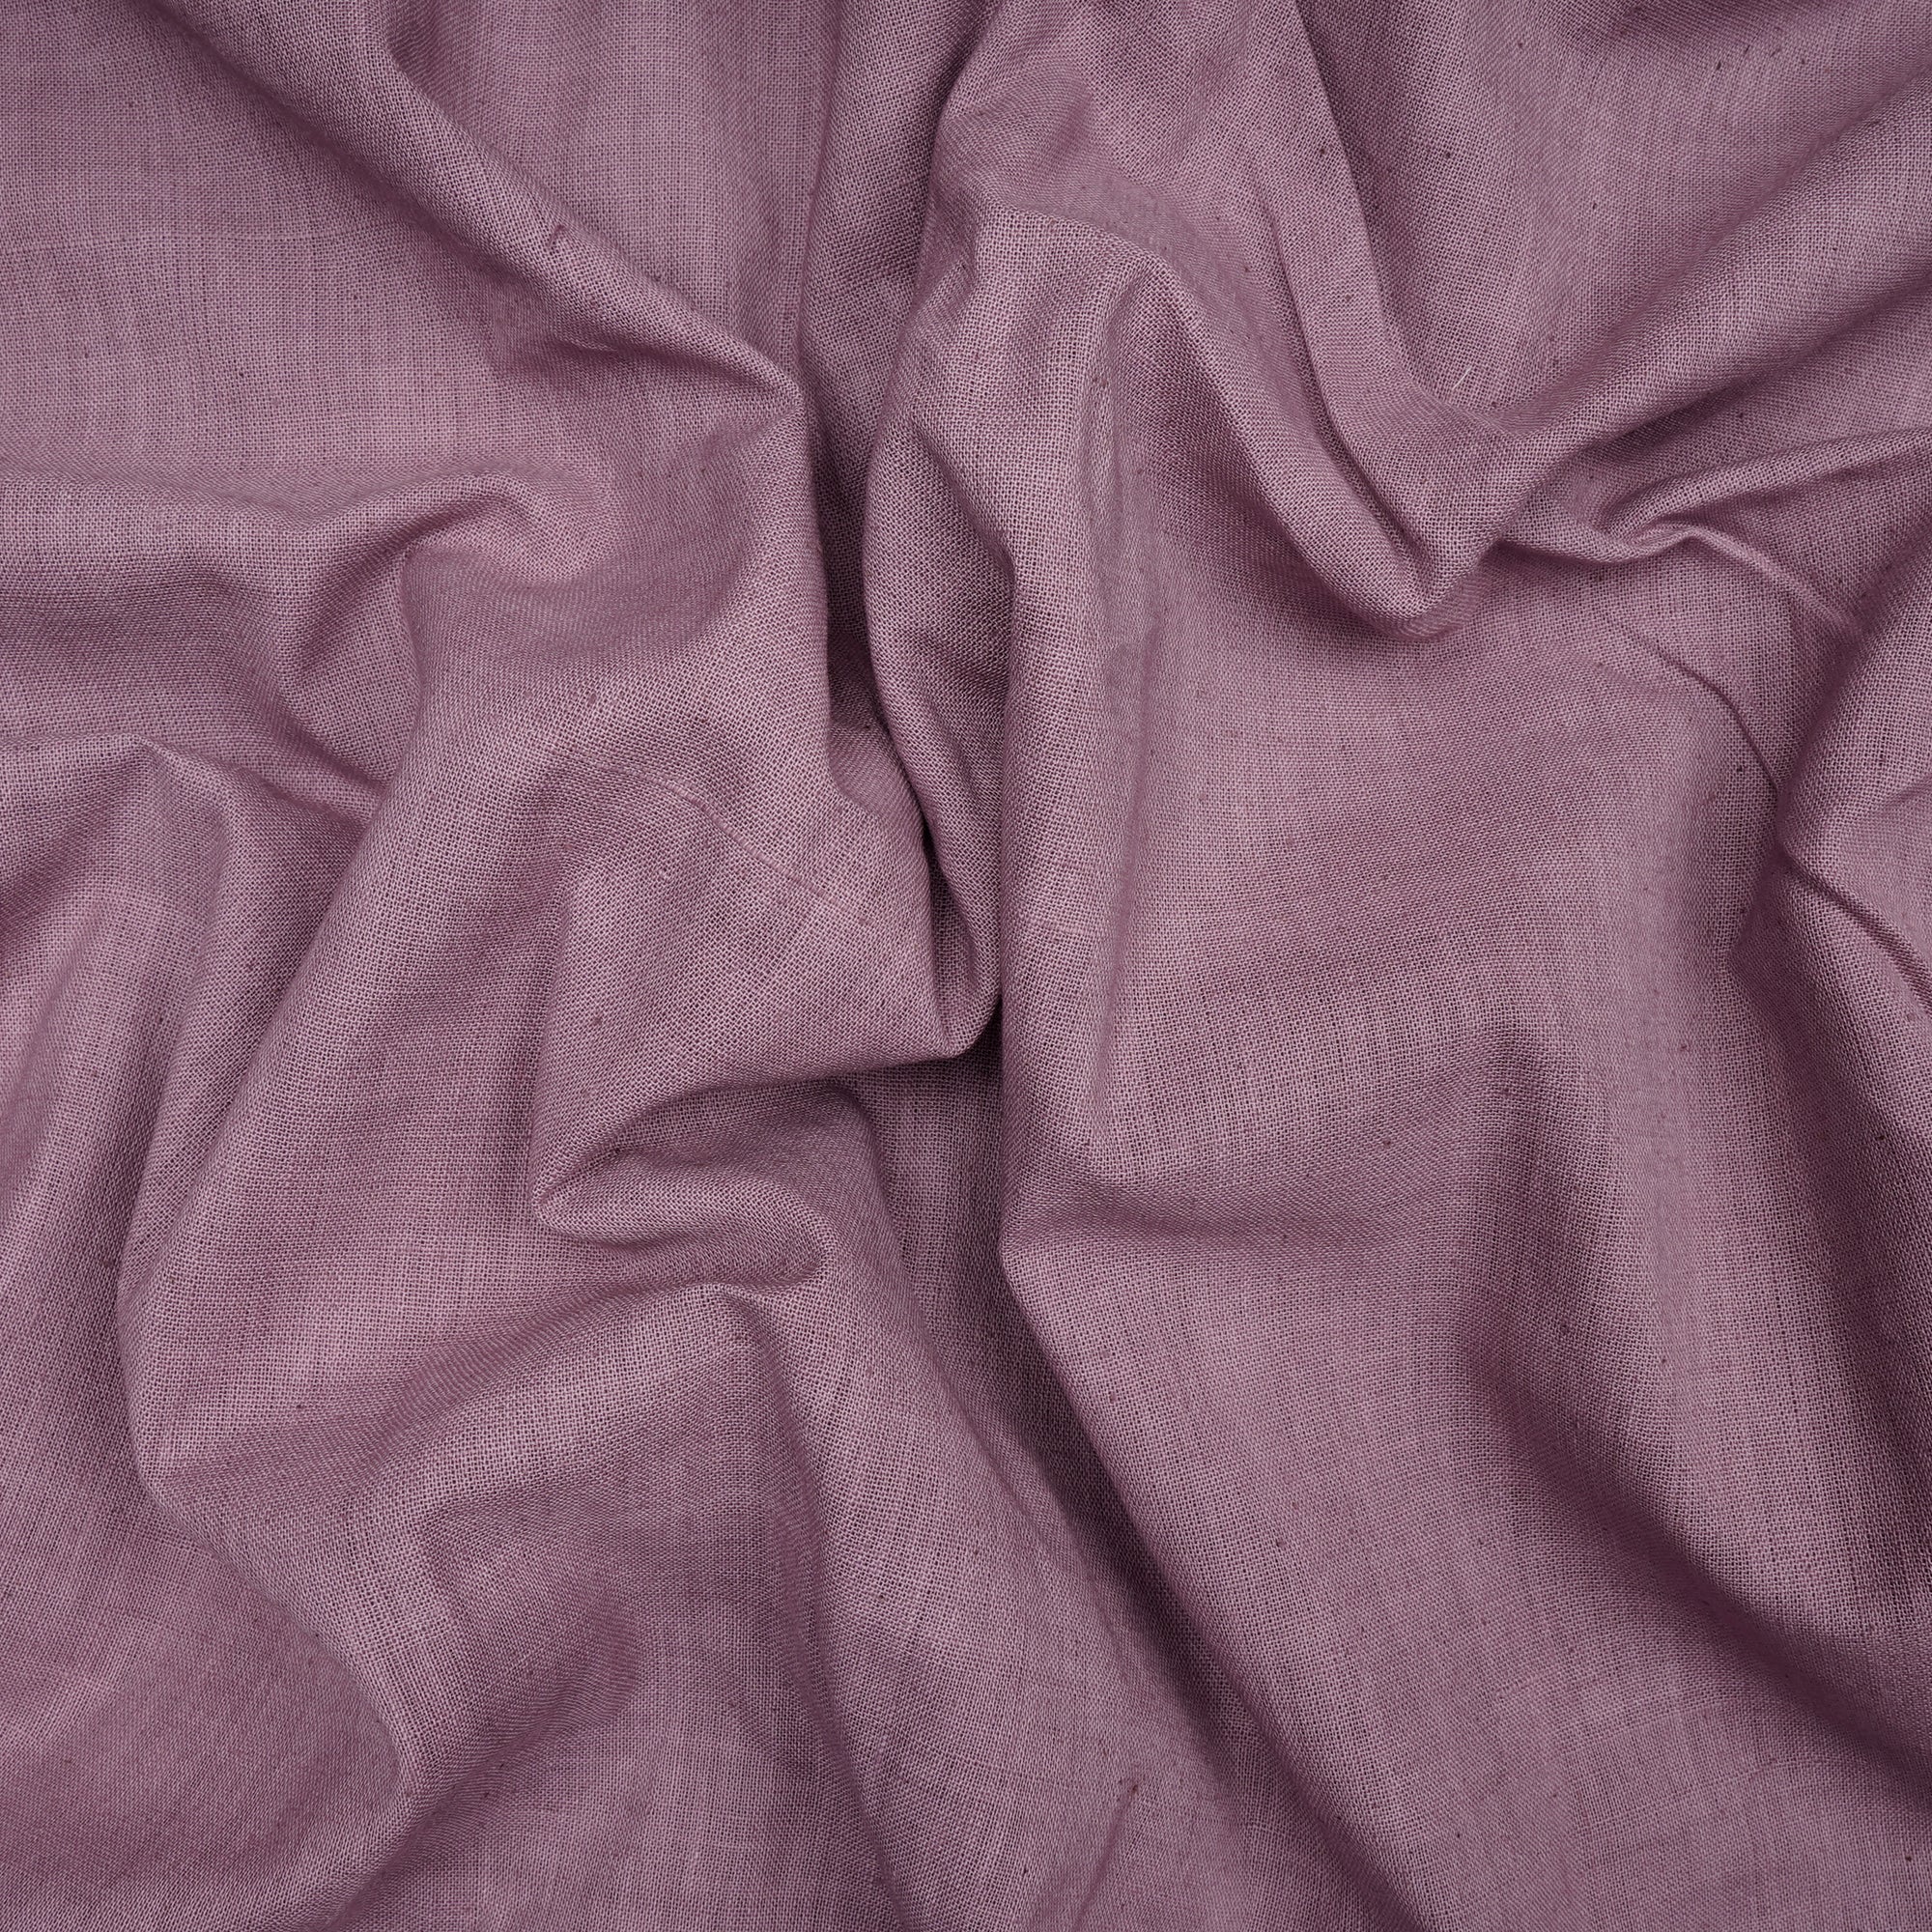 Mauve Shadows 40's Count Piece Dyed Handspun Handwoven Cotton Fabric